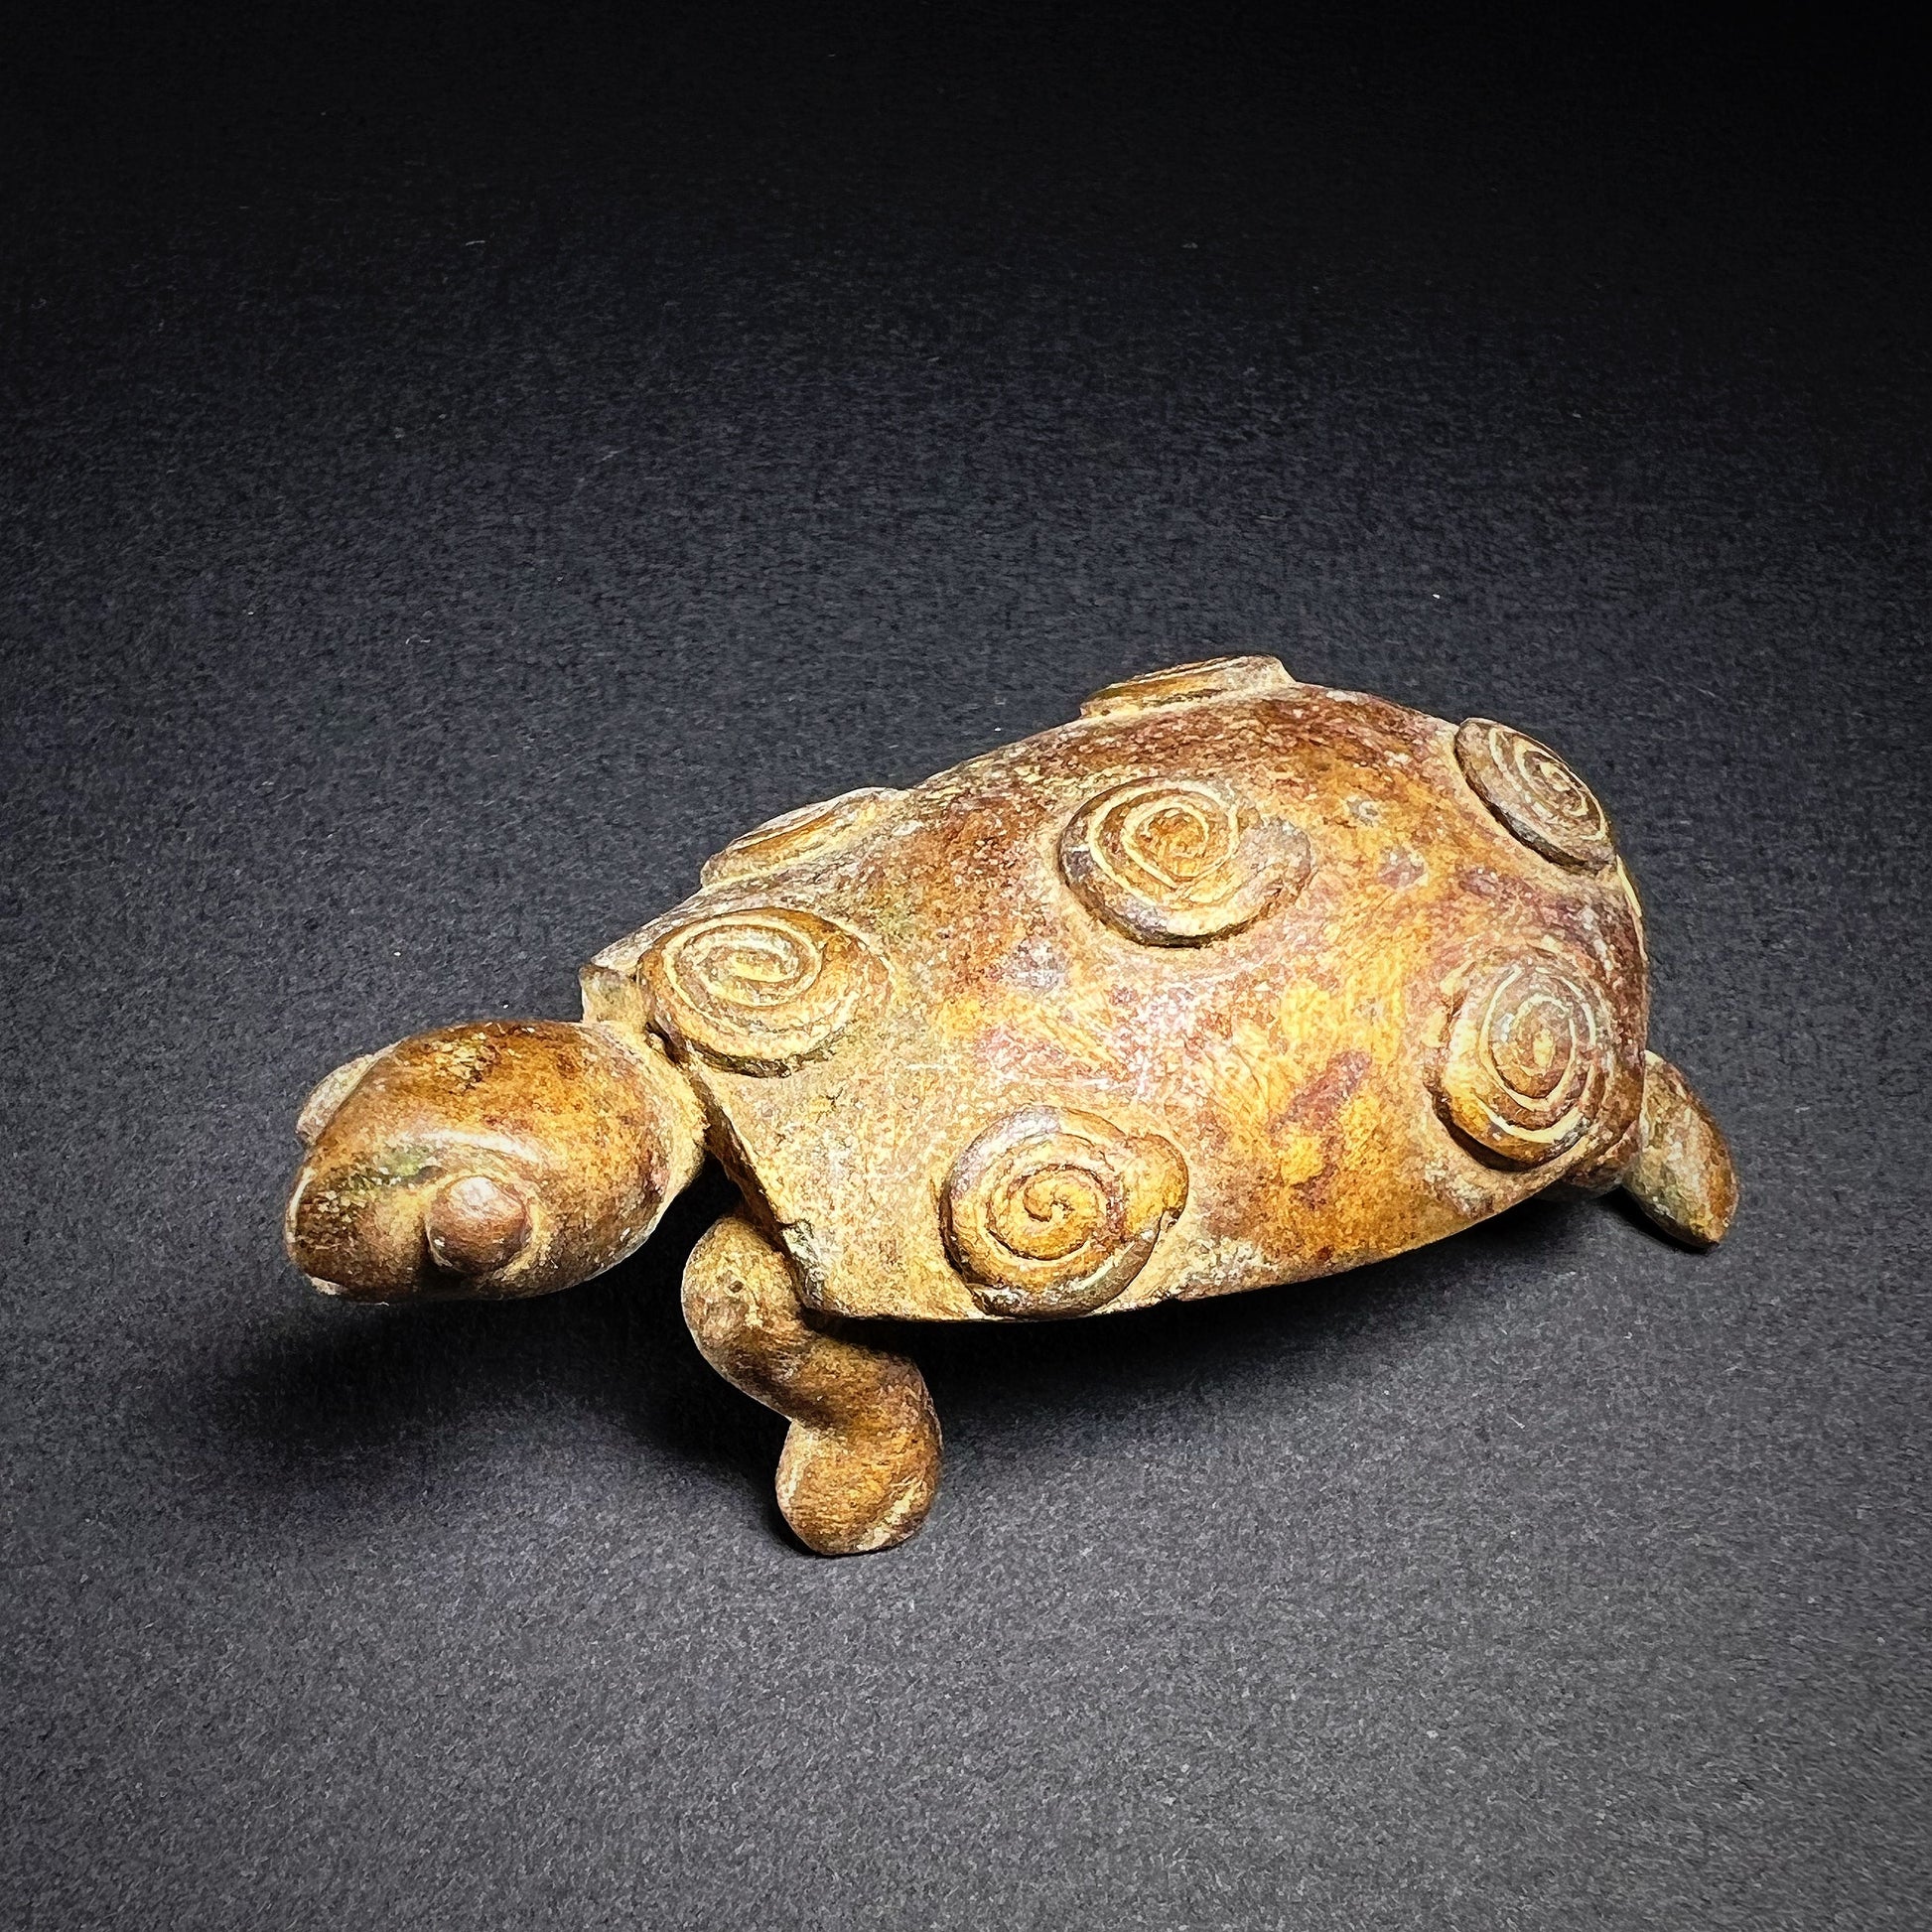 Asanti gold weight - turtle